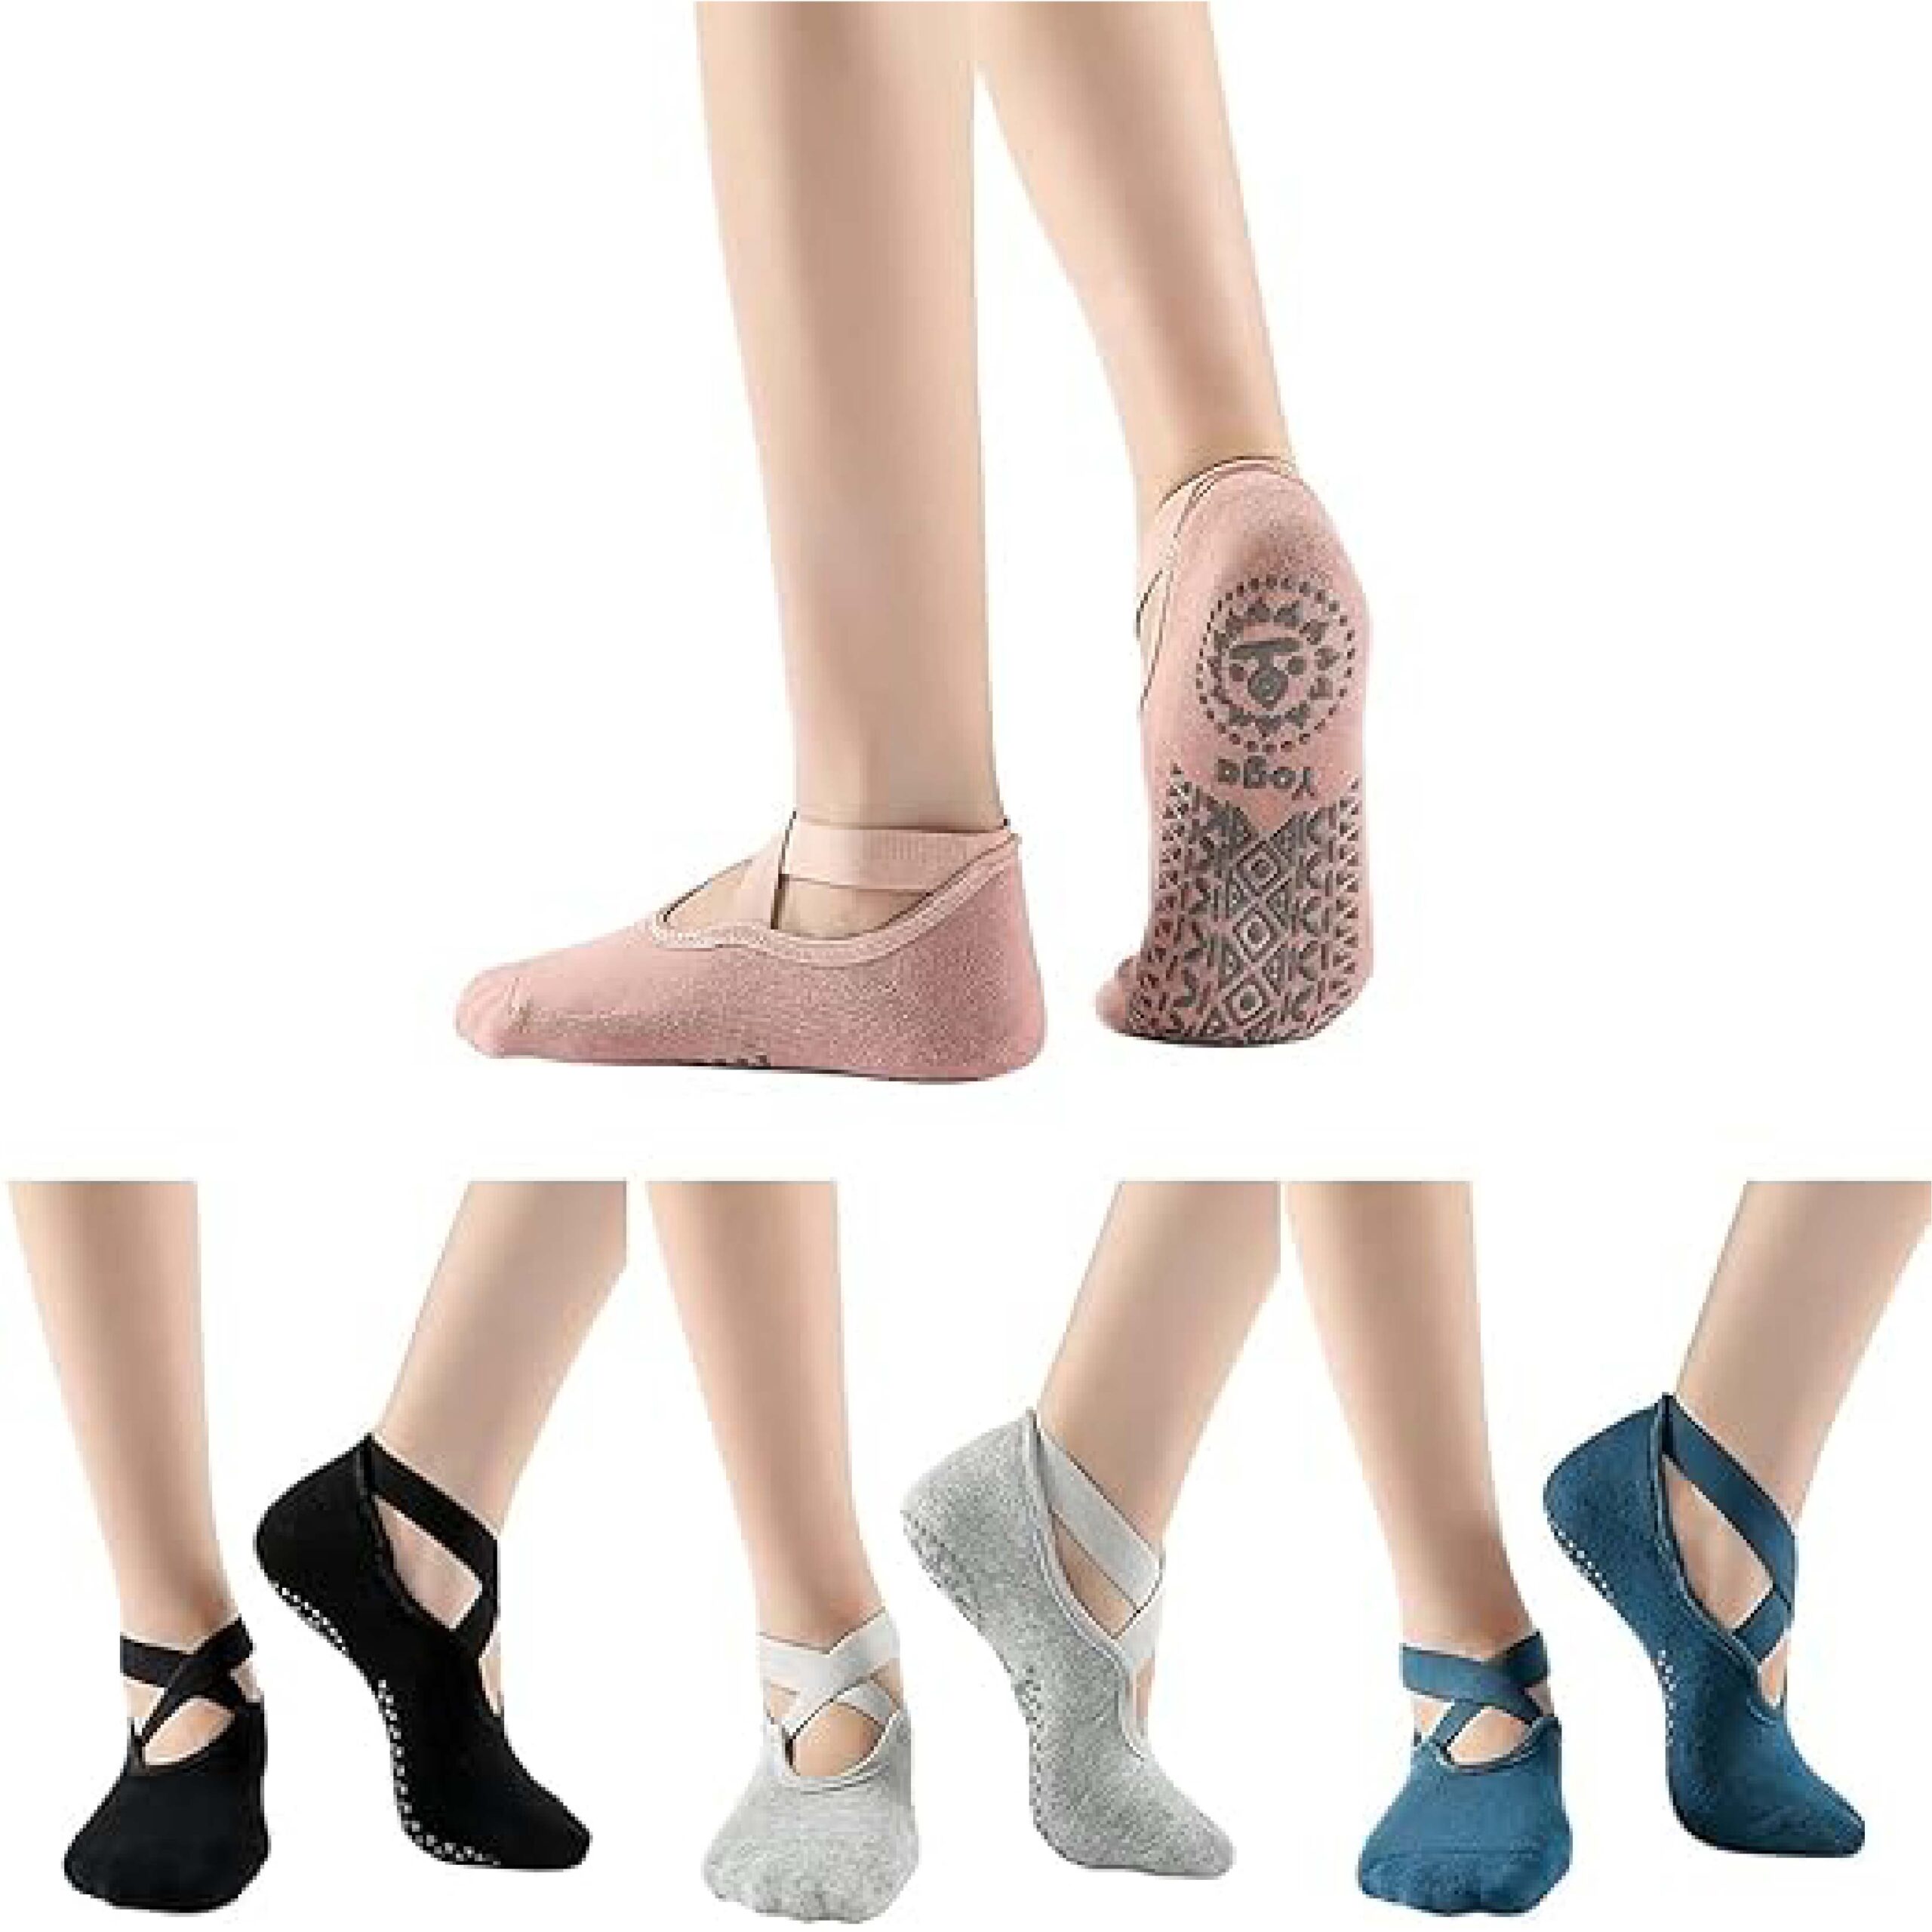 https://stylishlegacy.com/wp-content/uploads/2024/03/Yoga-Socks-For-Women-scaled.jpg